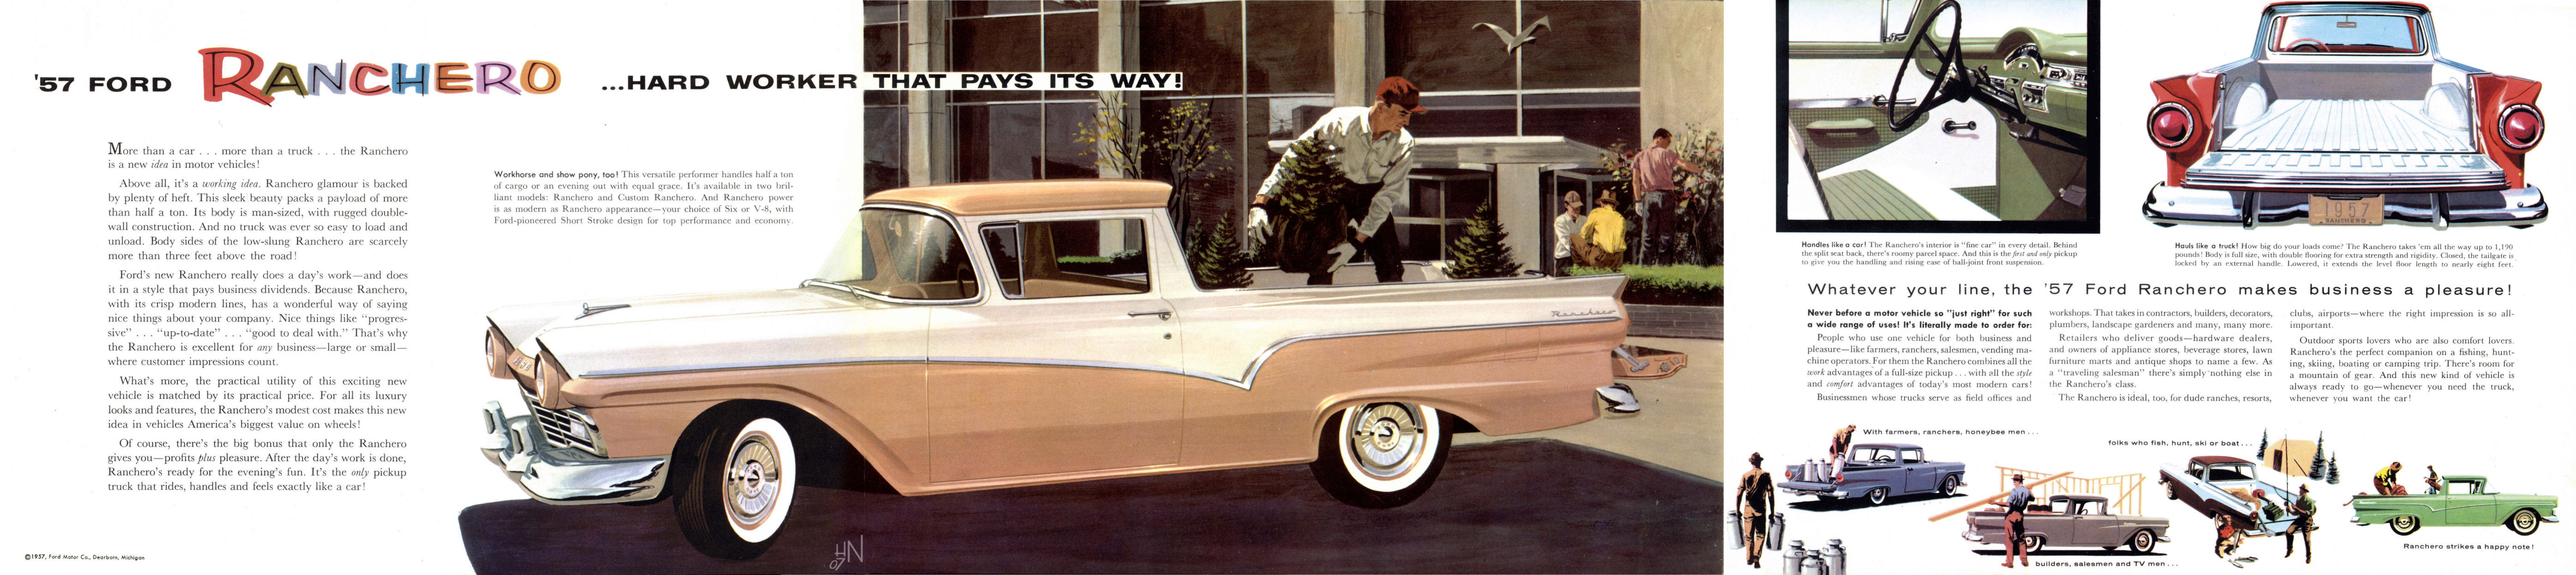 1957 Ford Ranchero Foldout Page 4